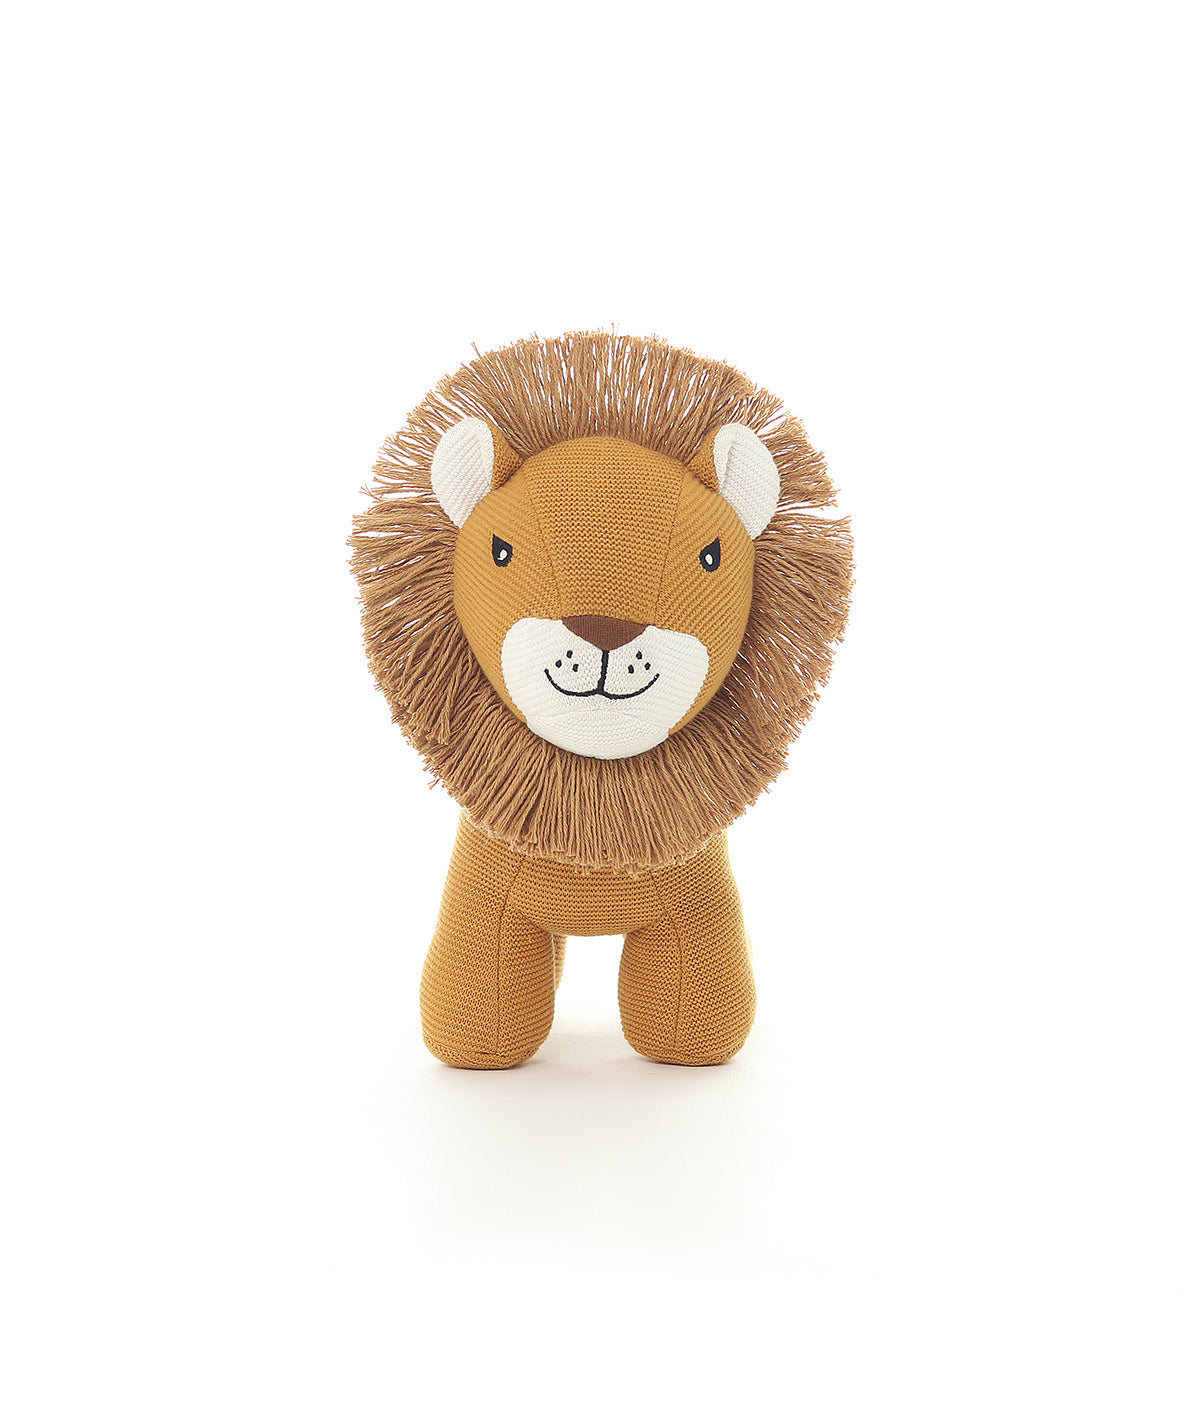 Magnus Lion Cotton Knitted Stuffed Soft Toy (Mustard & Wheat)